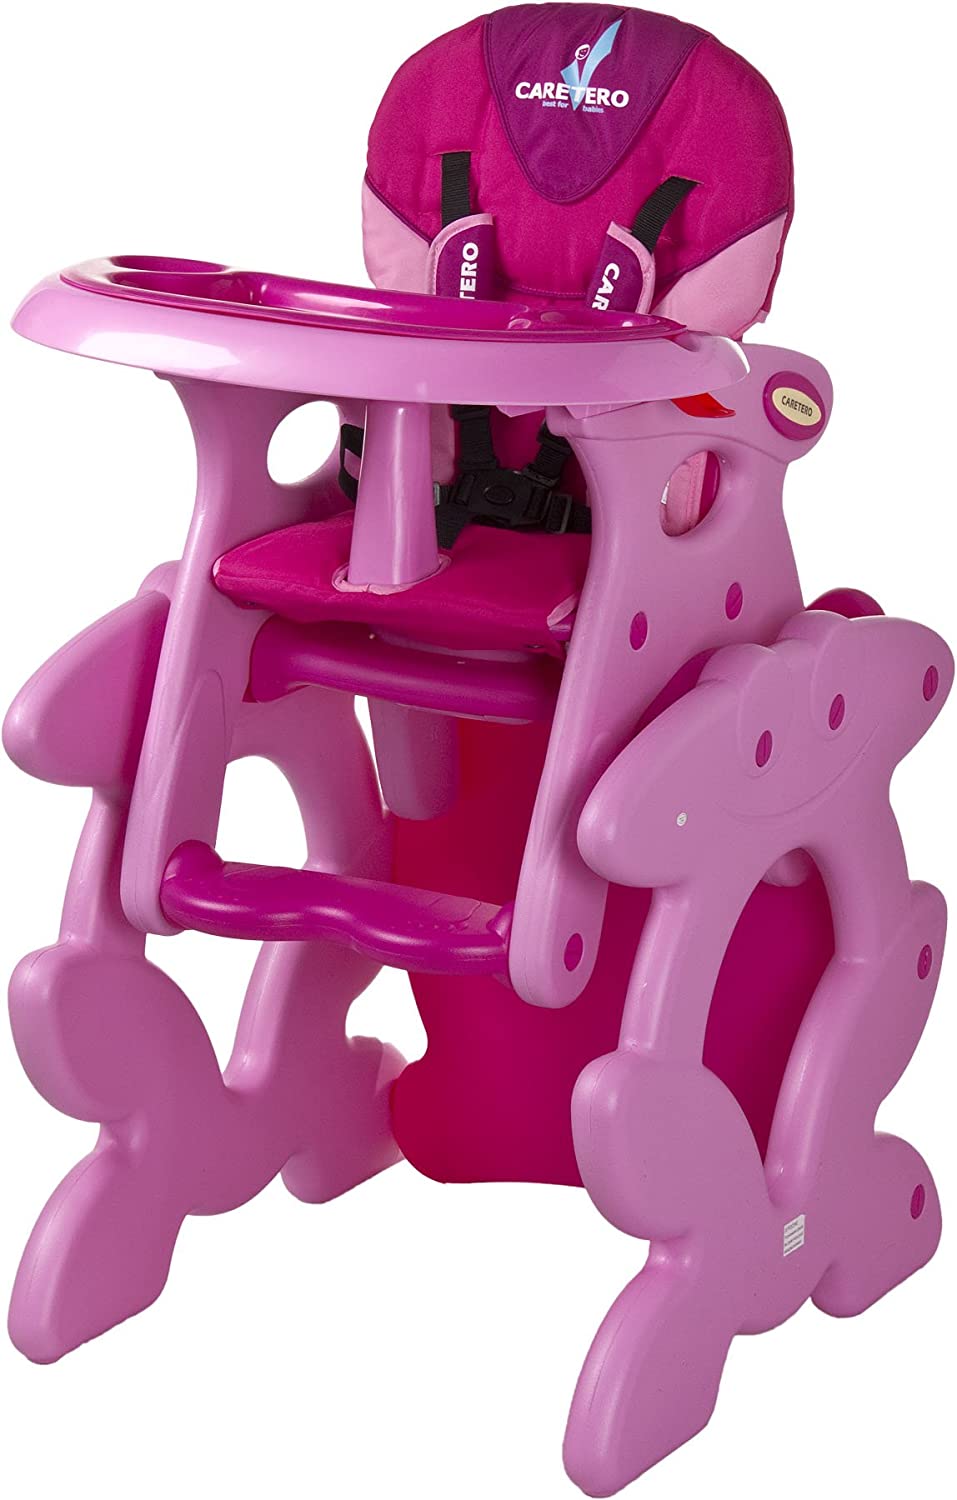 Caretero Primus, 2-in-1 High Chair pink